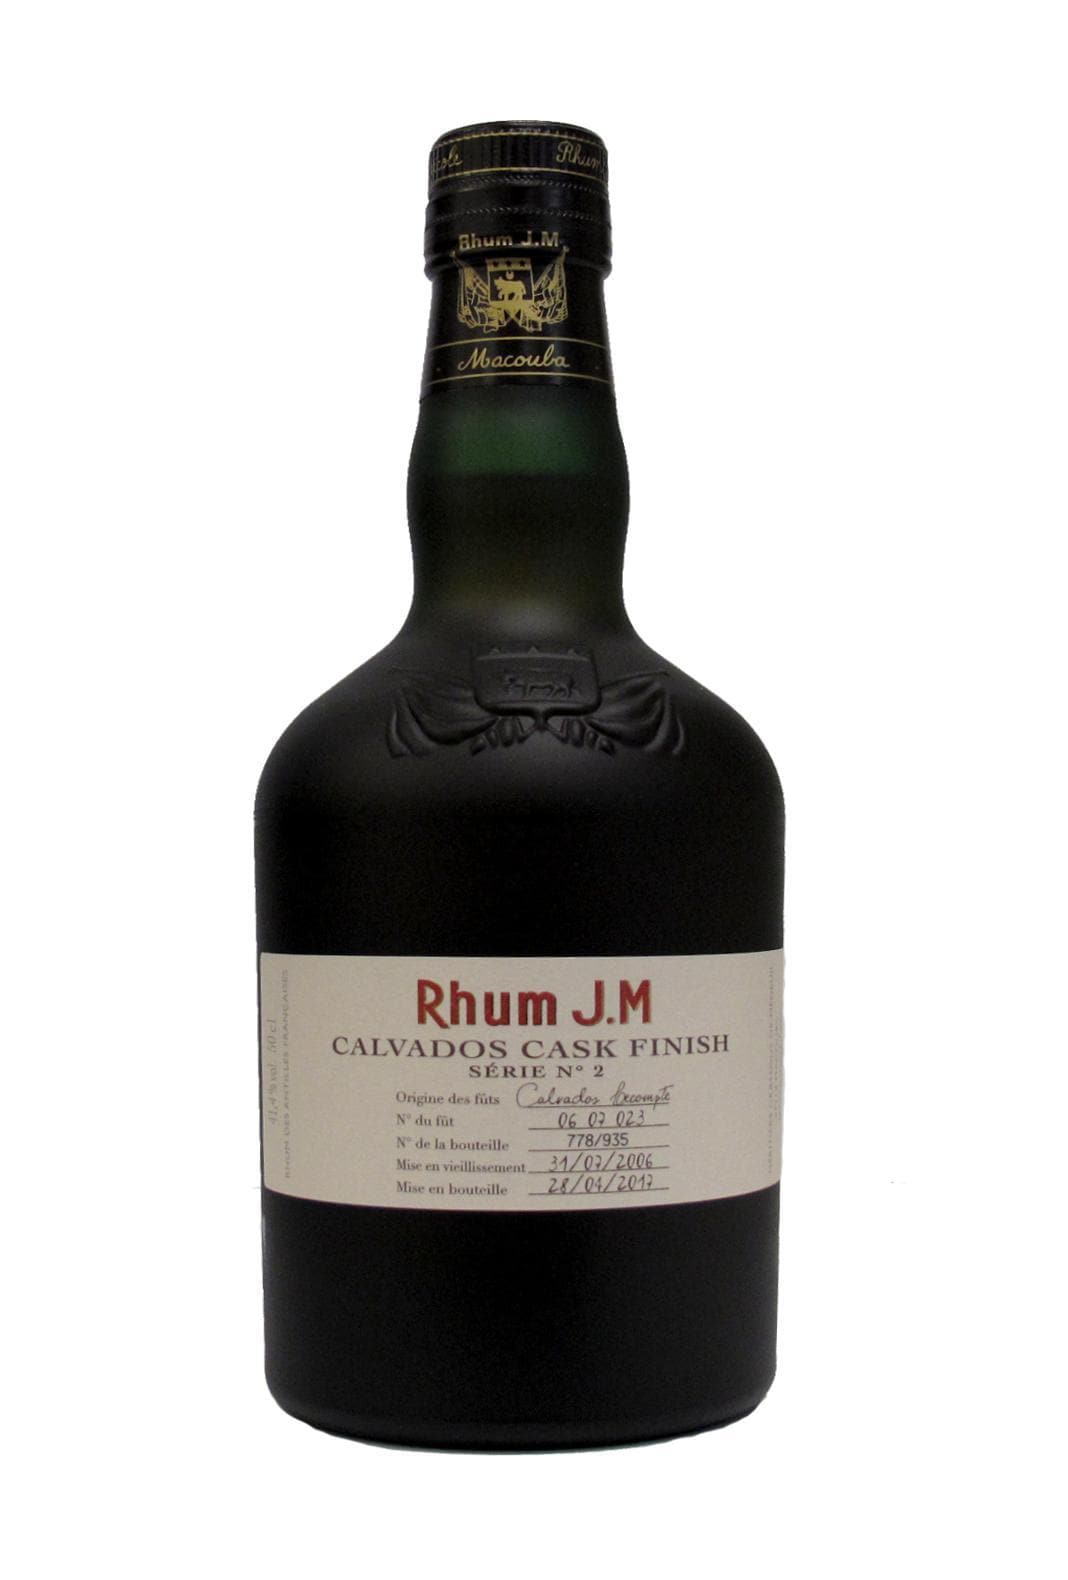 J.M Rhum Agricole 2006 Lecompte Cask (Calvados) Finish 41.4% 500ml | Rum | Shop online at Spirits of France